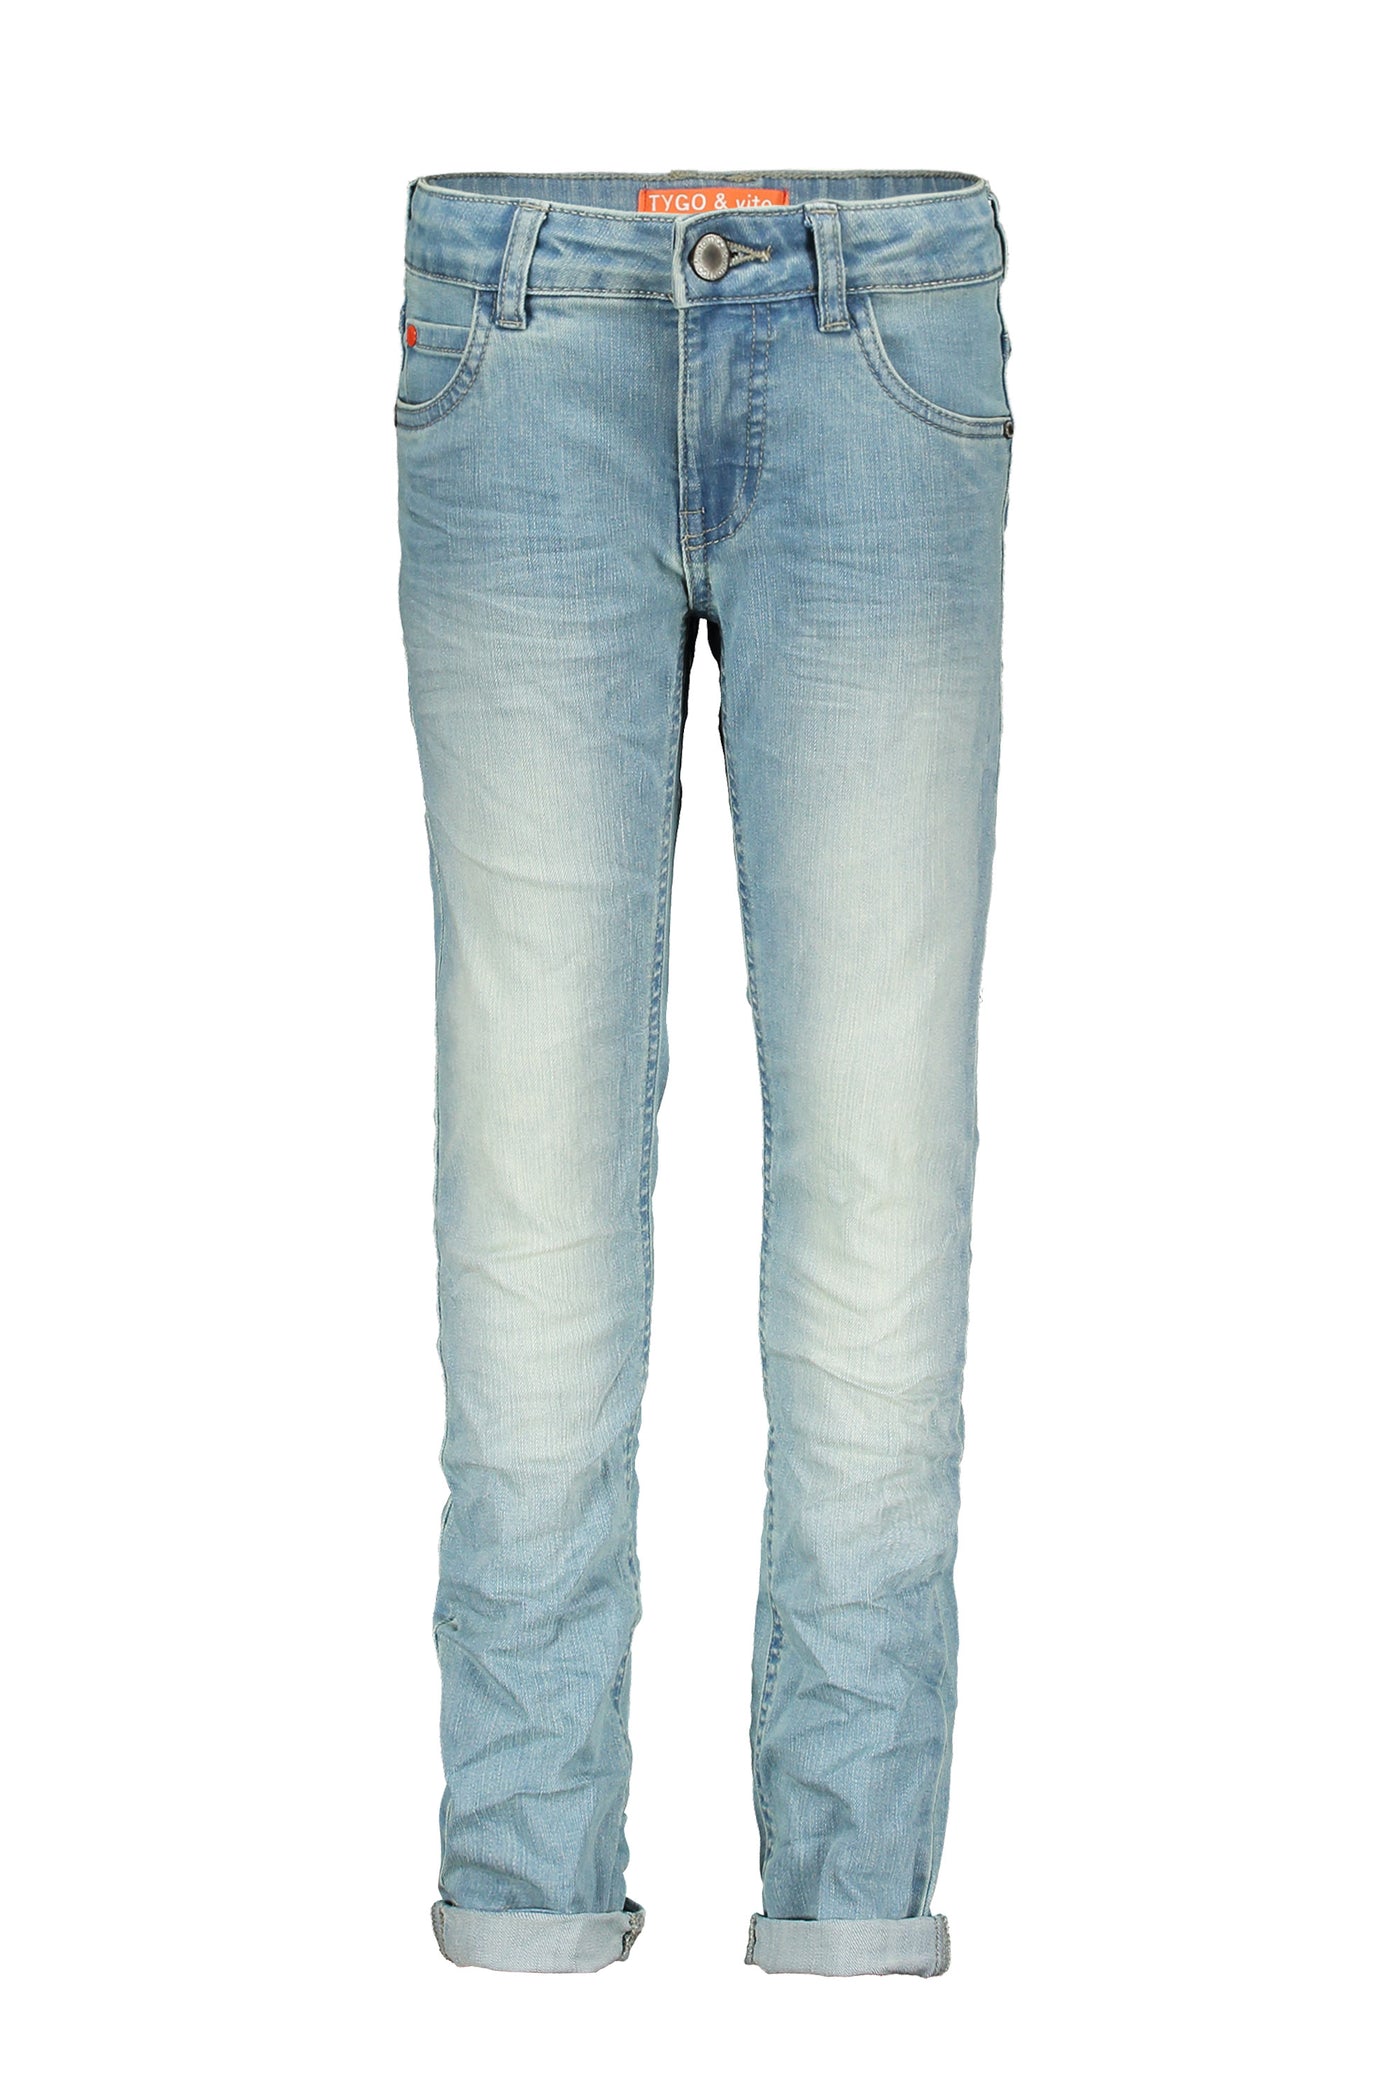 Tygo & Vito skinny jeans stretch jeans Extra Light Used XNOOS002-6600 800